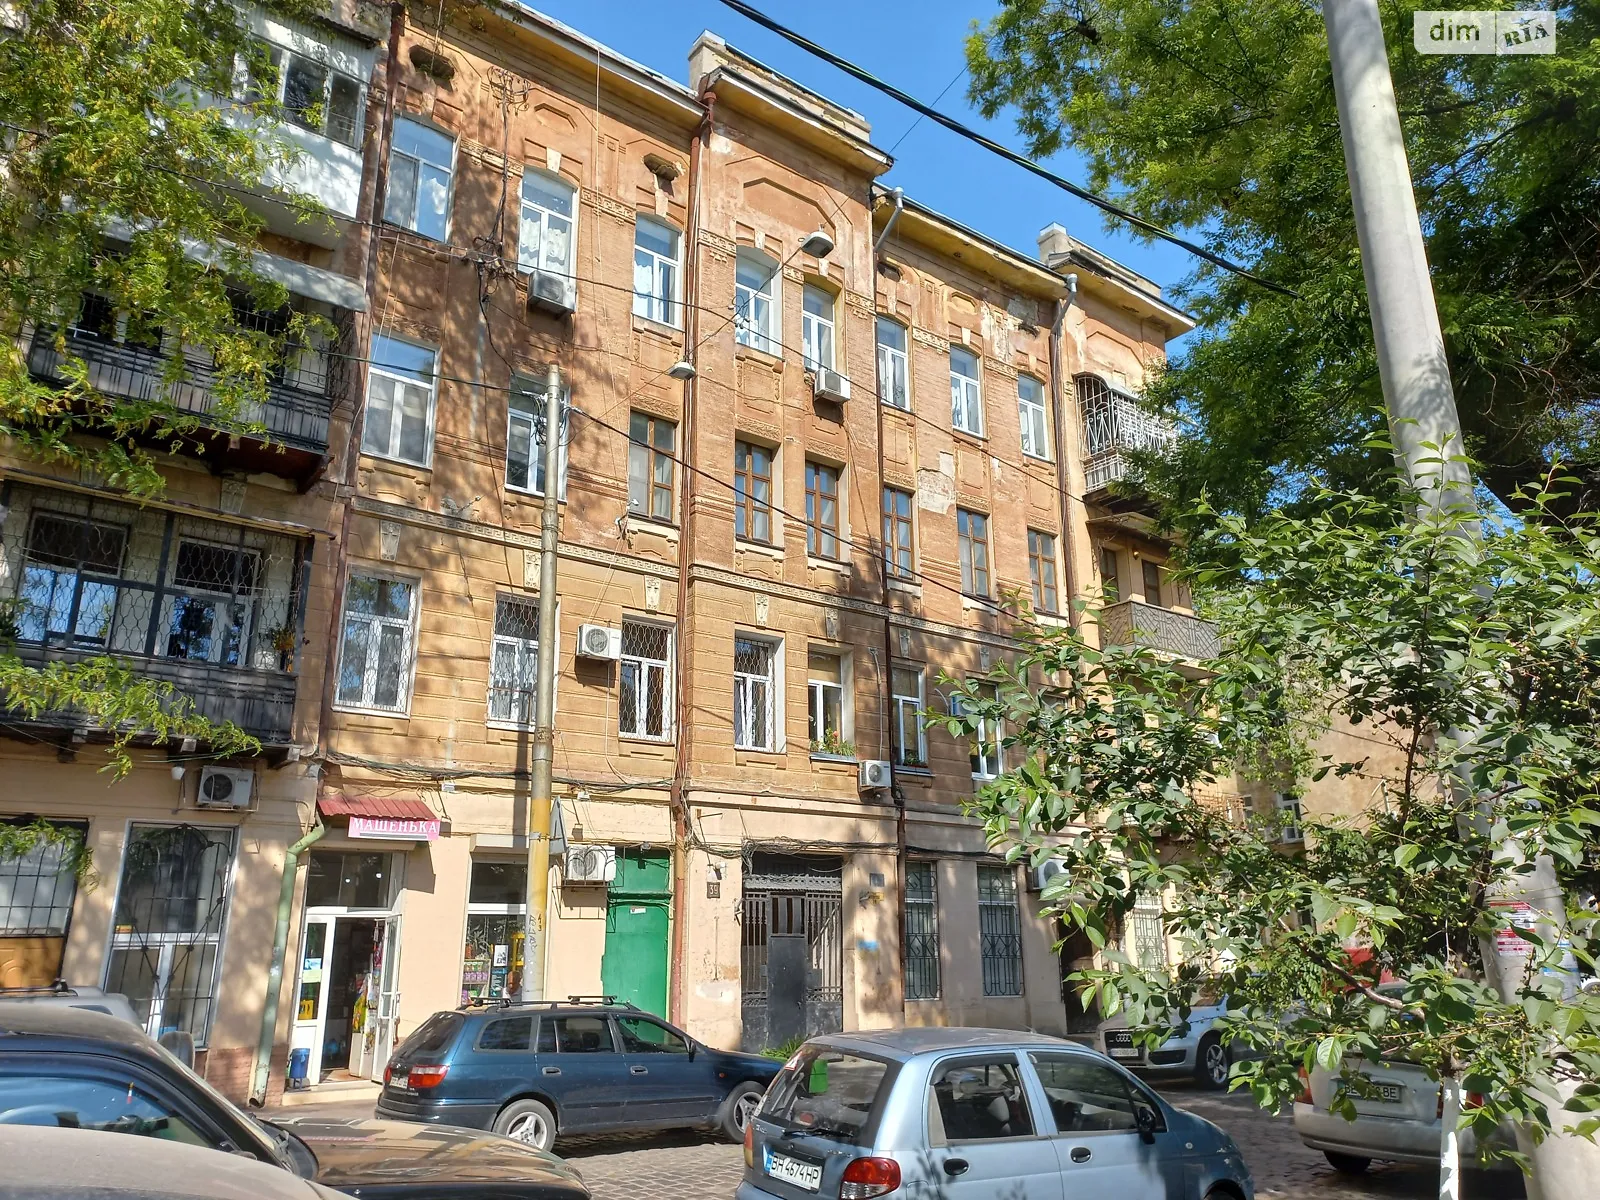 Продается комната 16 кв. м в Одессе, цена: 8000 $ - фото 1